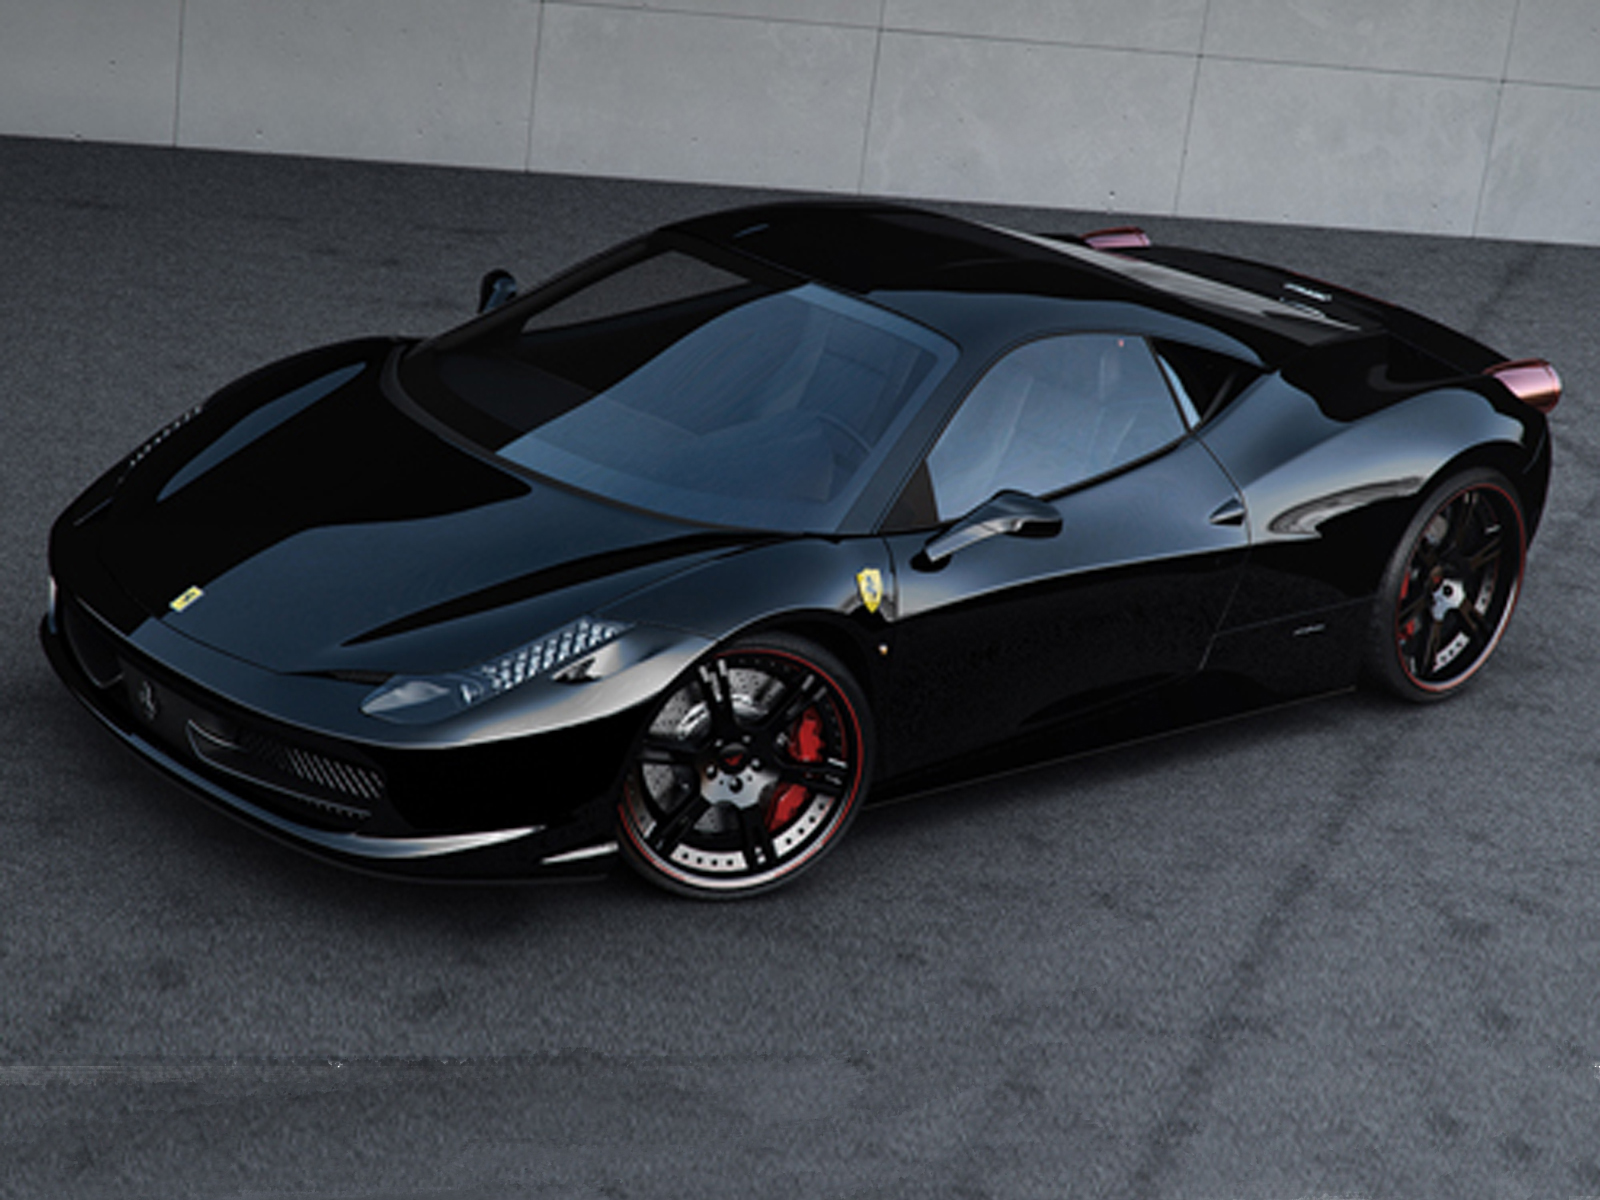 http://www.musclecarszone.com/wp-content/uploads/2013/10/2012-Wheelsandmore-Ferrari-458-Italia-Front-Angle-1.jpg